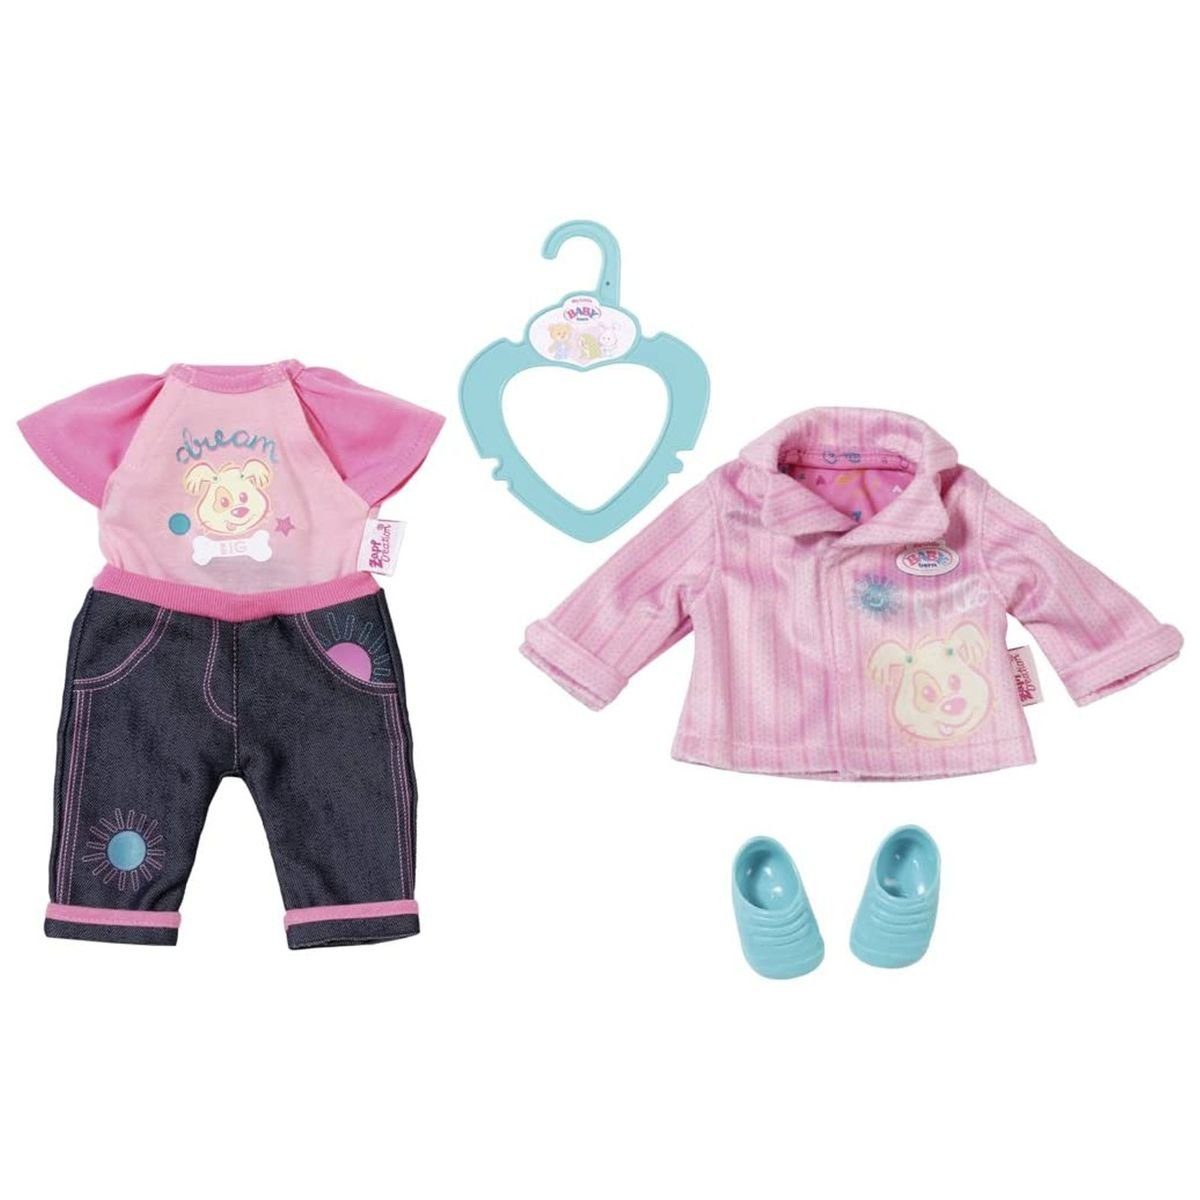 Outfit, - 825464 cm Little Accessoires-Set Kindergarten born My 32 Zapf Creation® Zapf Puppen BABY -